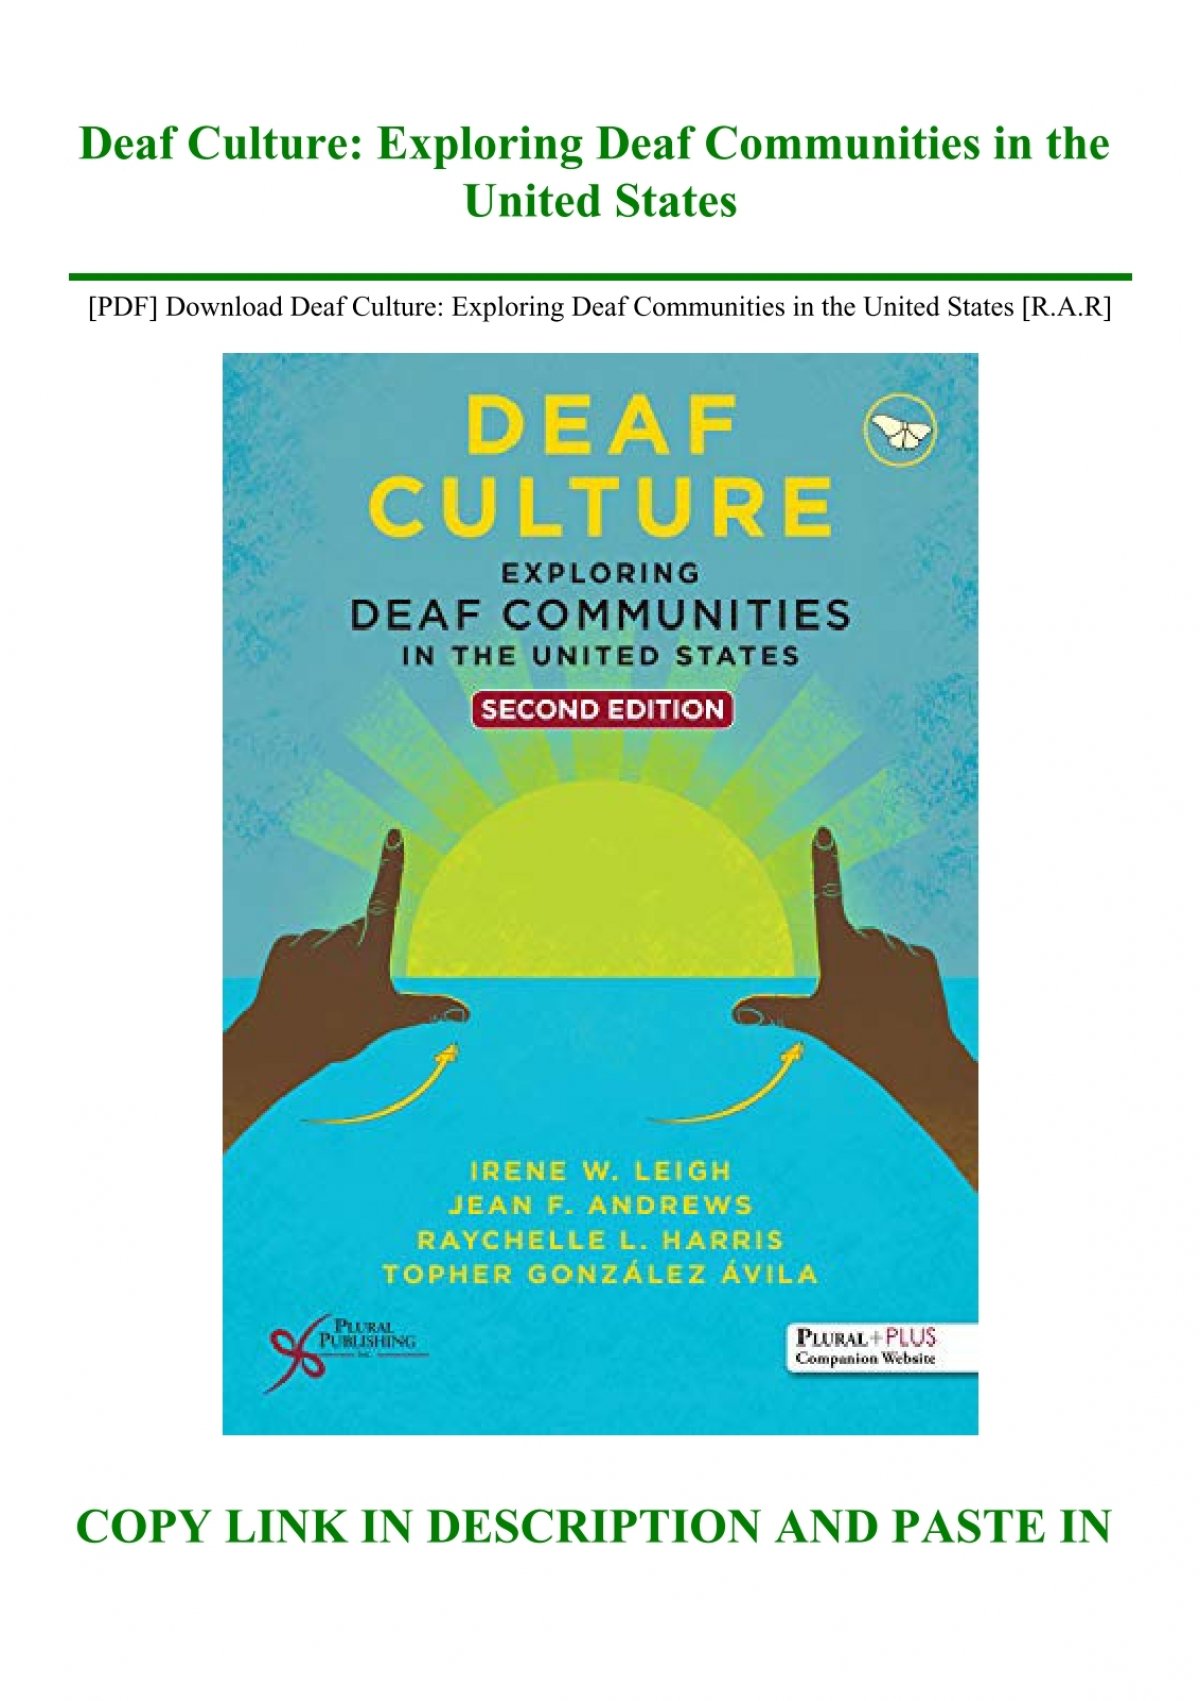 research paper on deaf culture topics